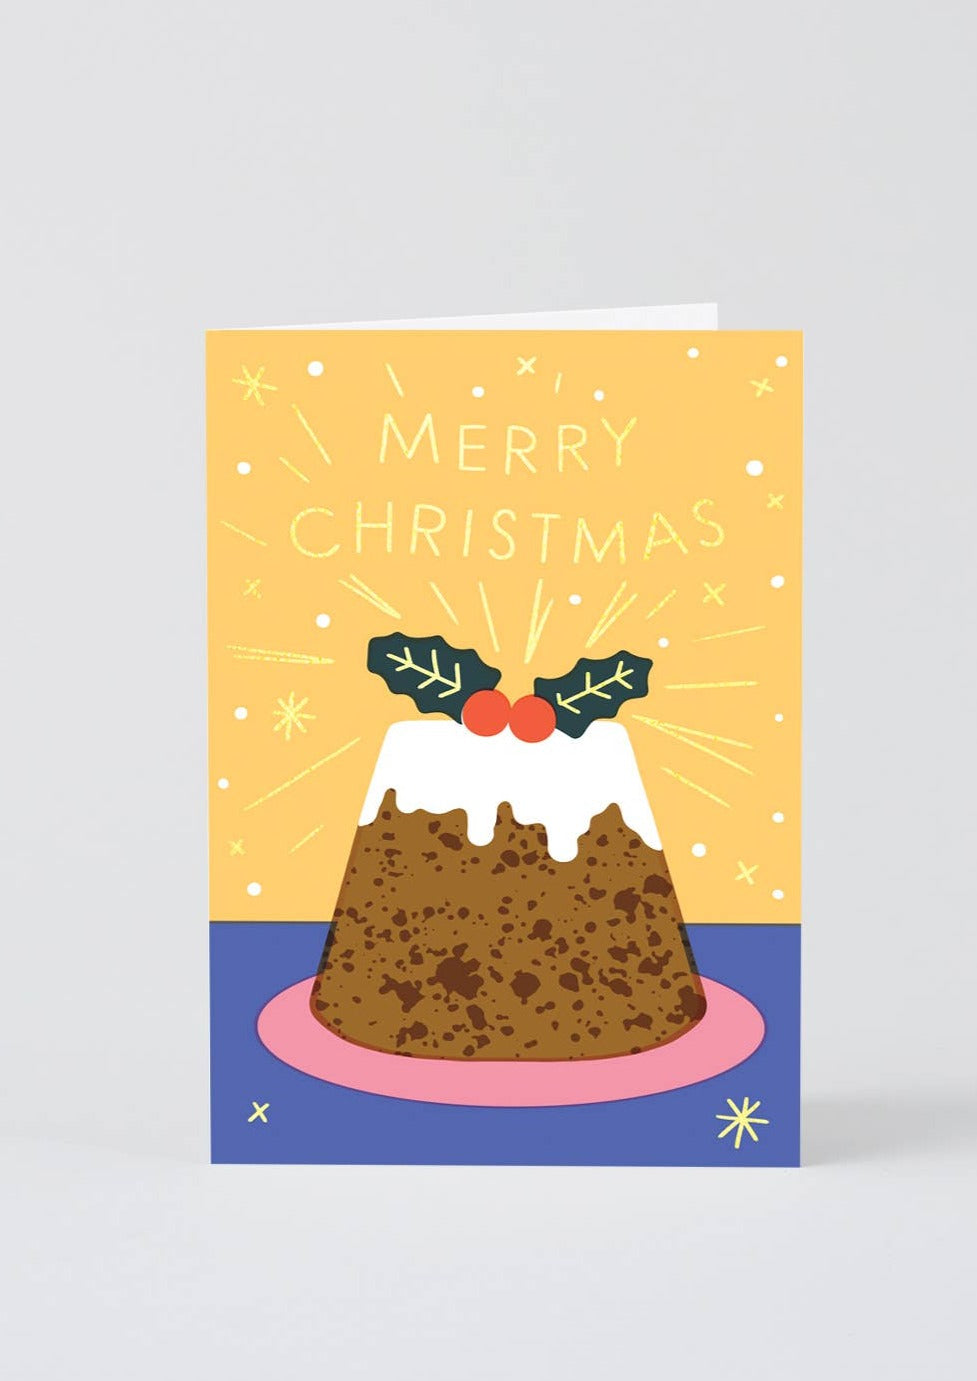 Merry Christmas Pudding Greeting Card